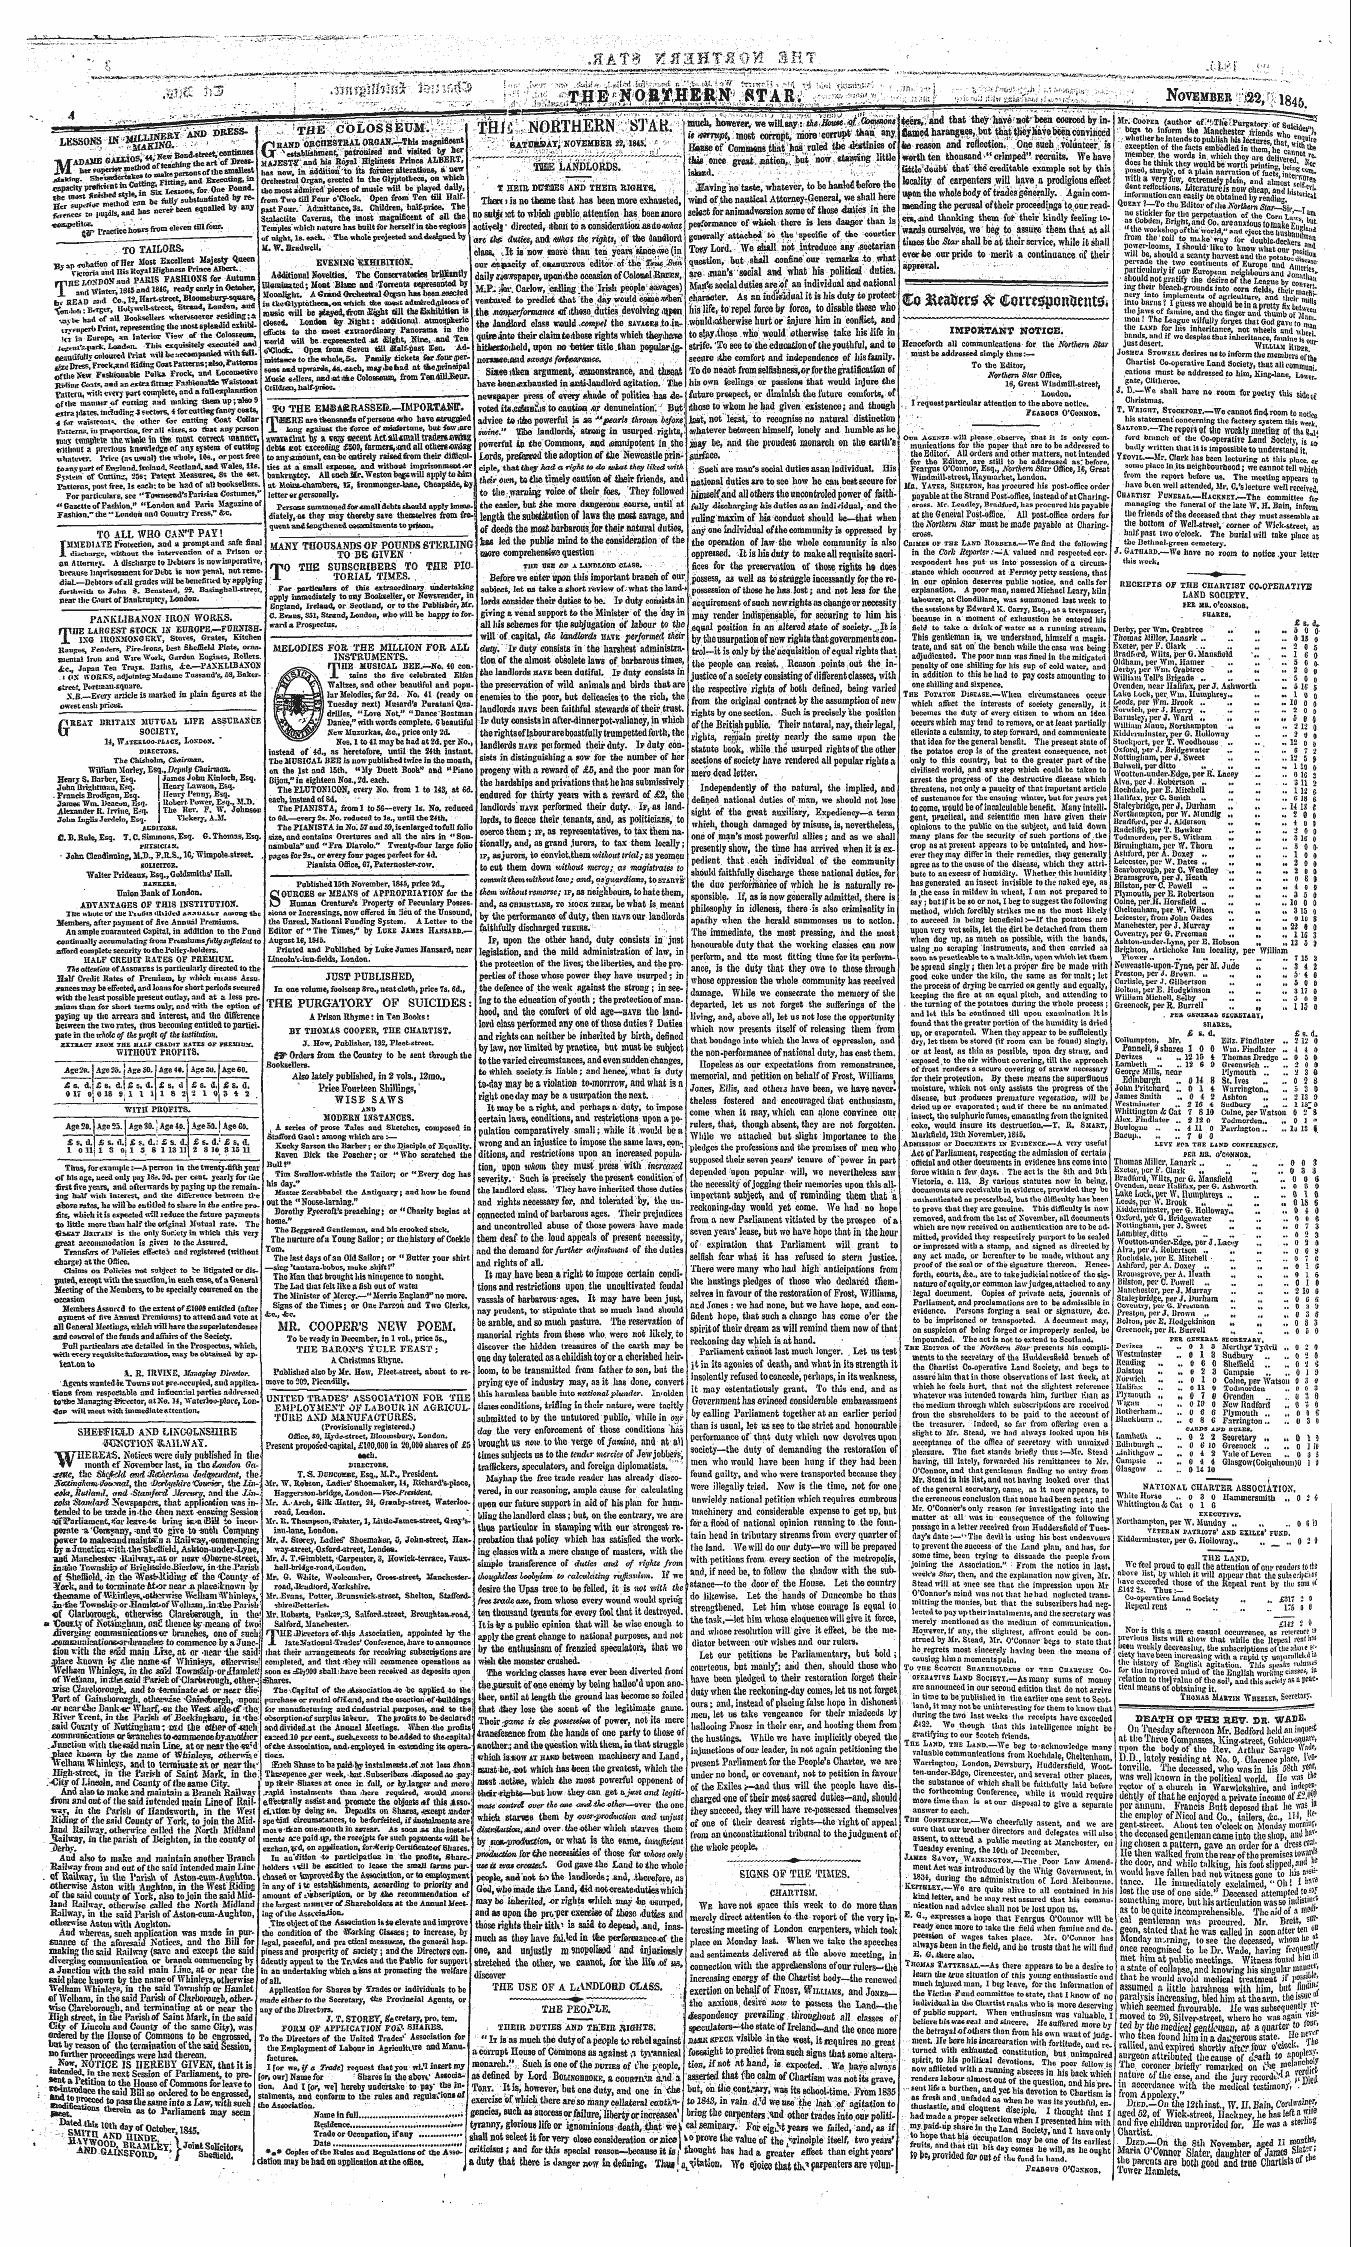 Northern Star (1837-1852): jS F Y, 3rd edition - Thii * ;Ndfituebn^Stah :: ^'R ' ' Satu^Ati 'November 22,'1845. ^ &Gt; ;